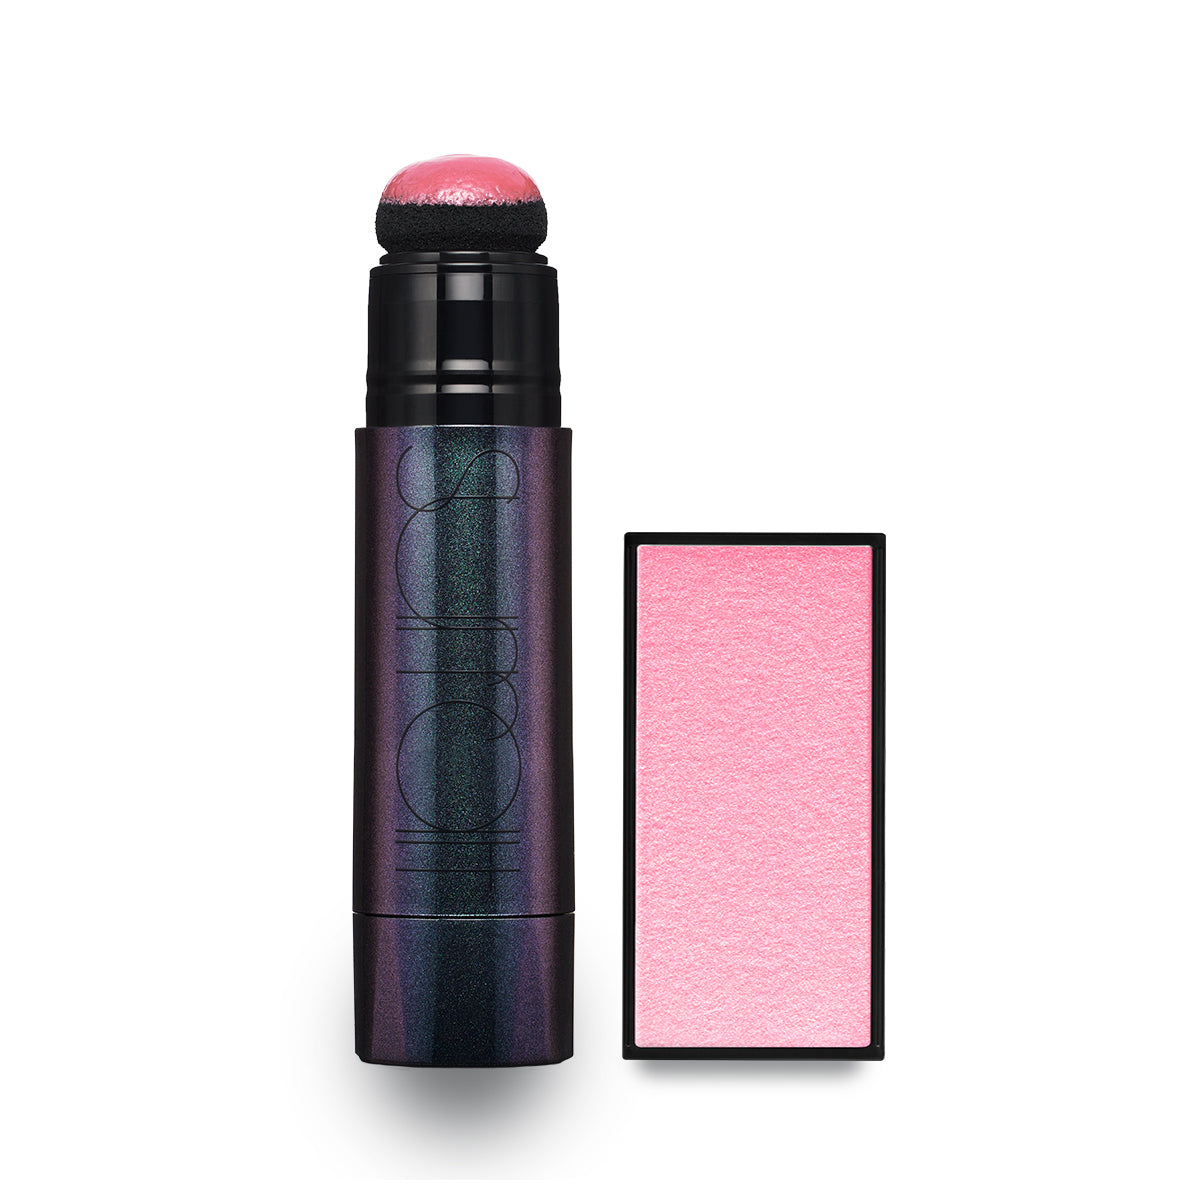 BARBE A PAPA - COOL BRIGHT PINK - Coordinating powder and liquid blush pair in cool bright pink shade